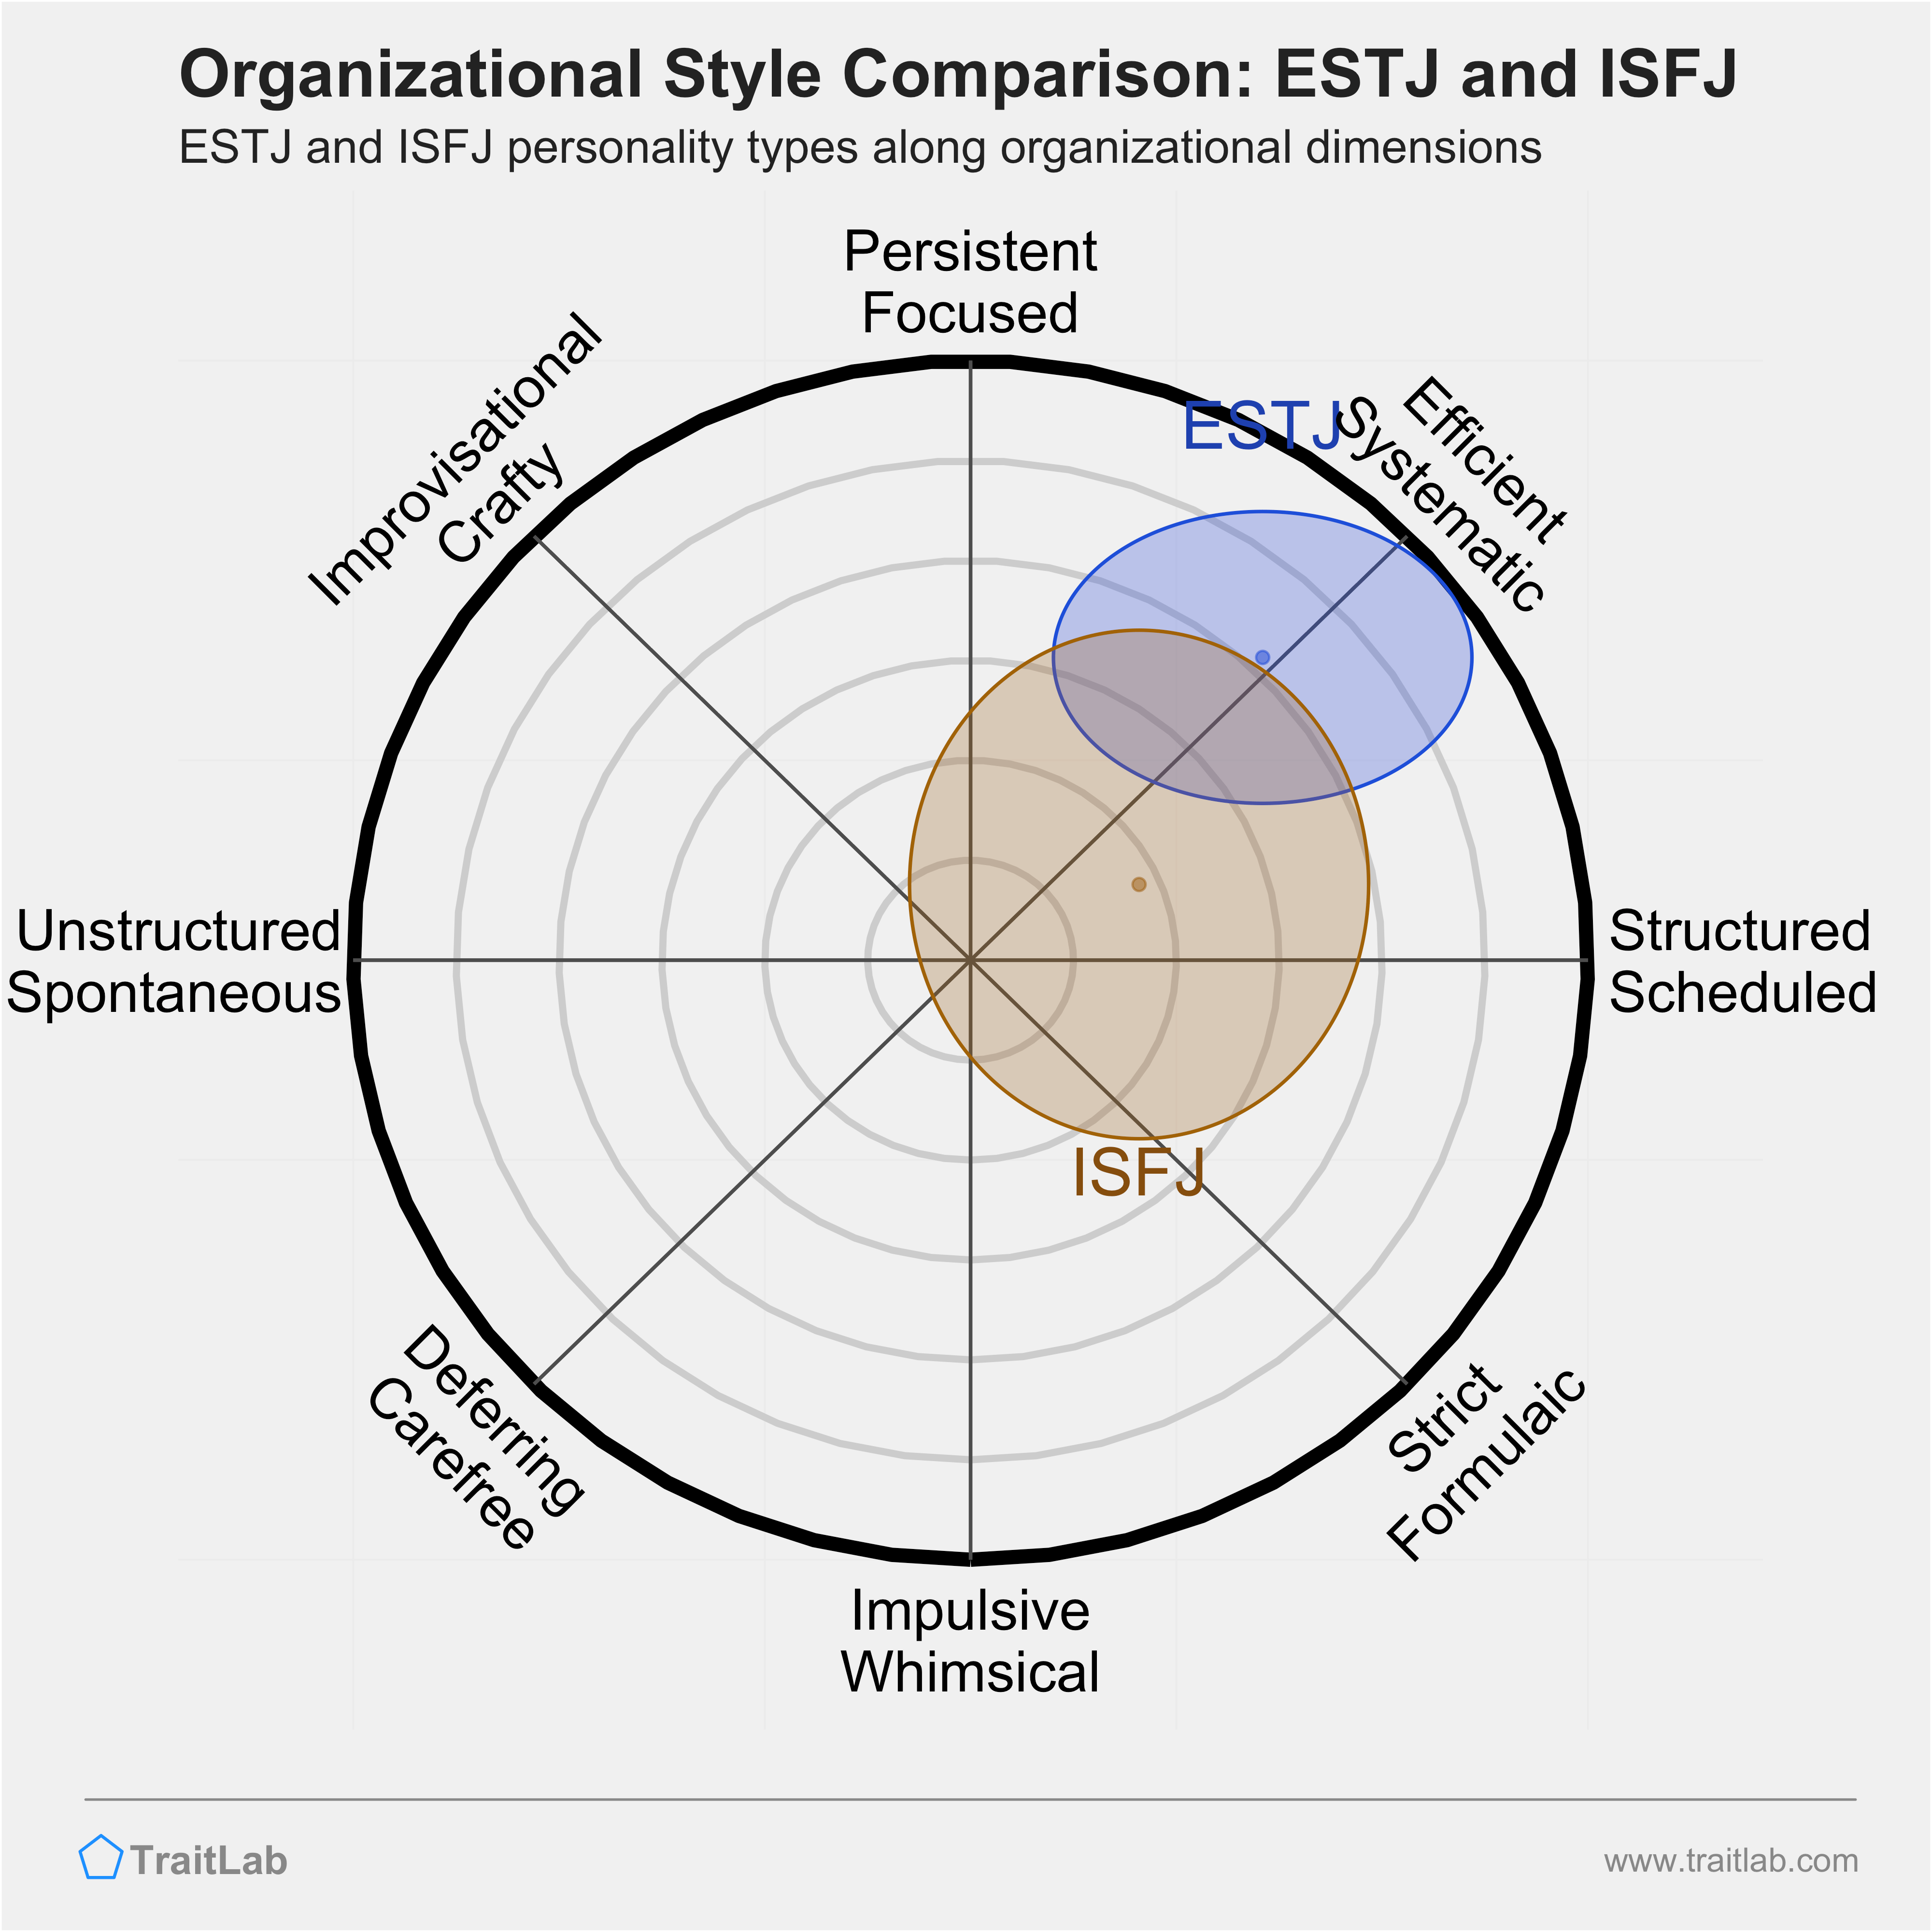 ESTJ and ISFJ comparison across organizational dimensions